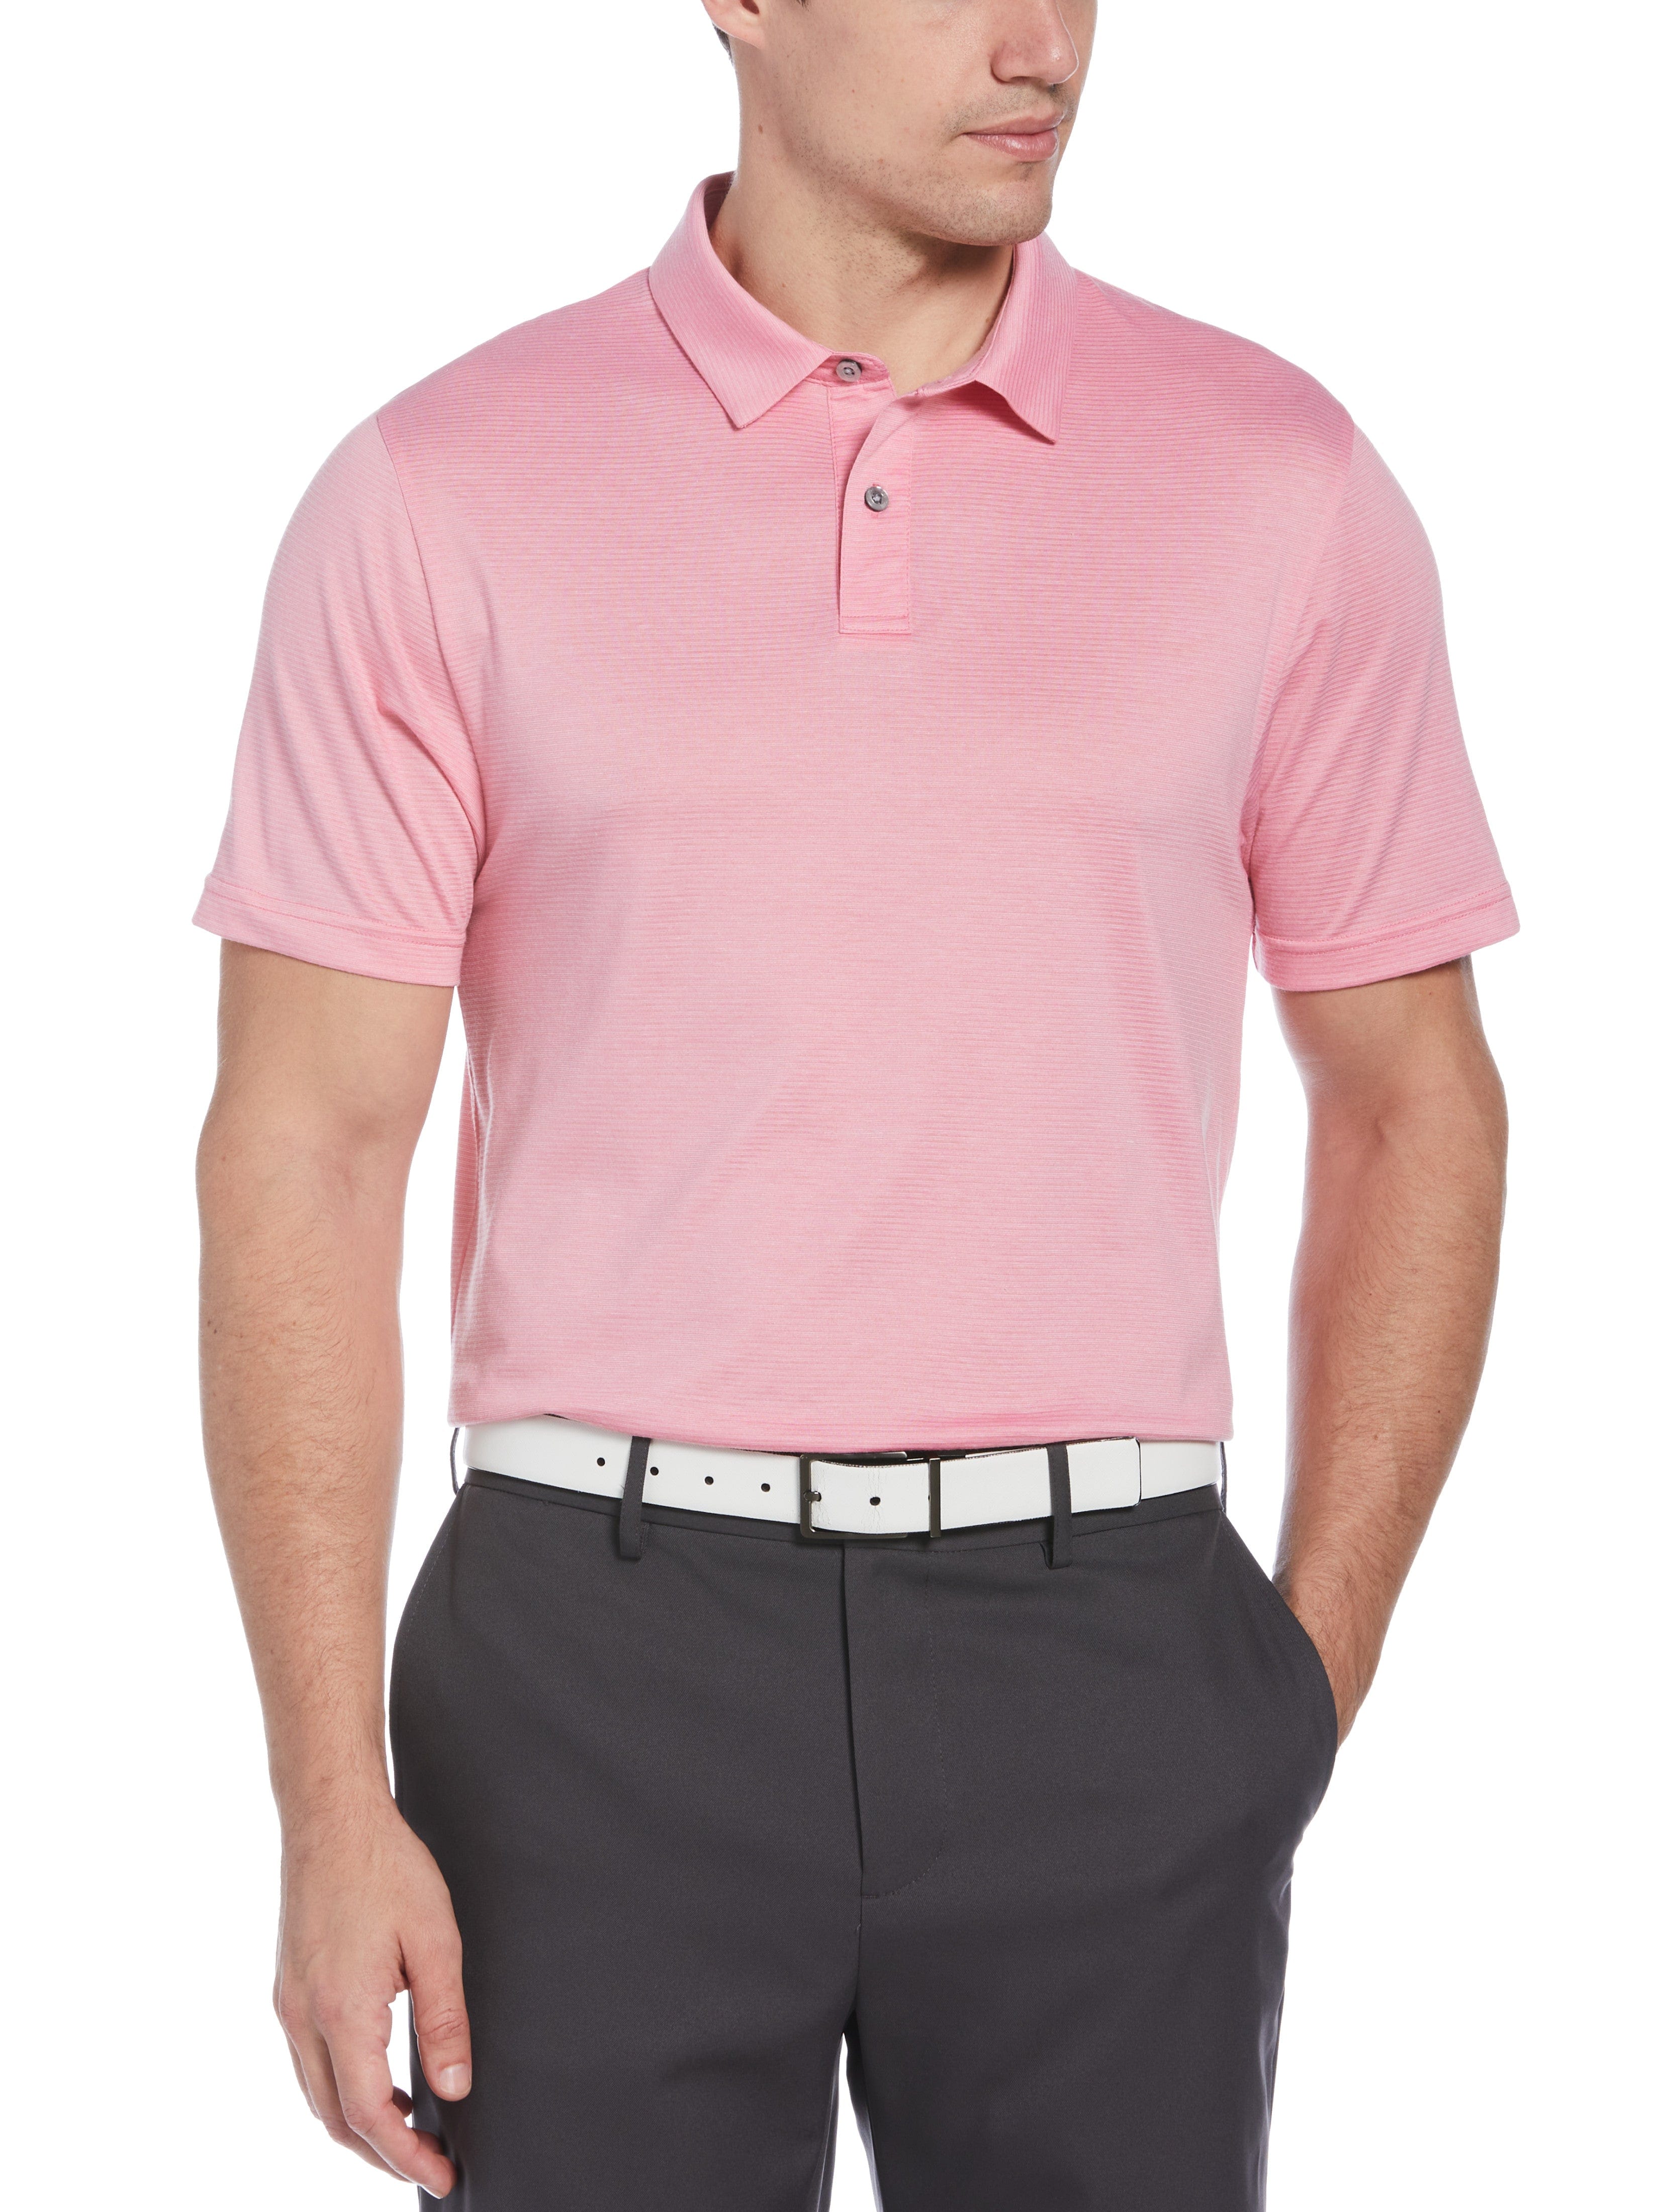 PGA TOUR Apparel Mens Eco Golf Polo Shirt, Size XL, Sea Pink Heather, Polyester/Recycled Polyester/Cotton | Golf Apparel Shop